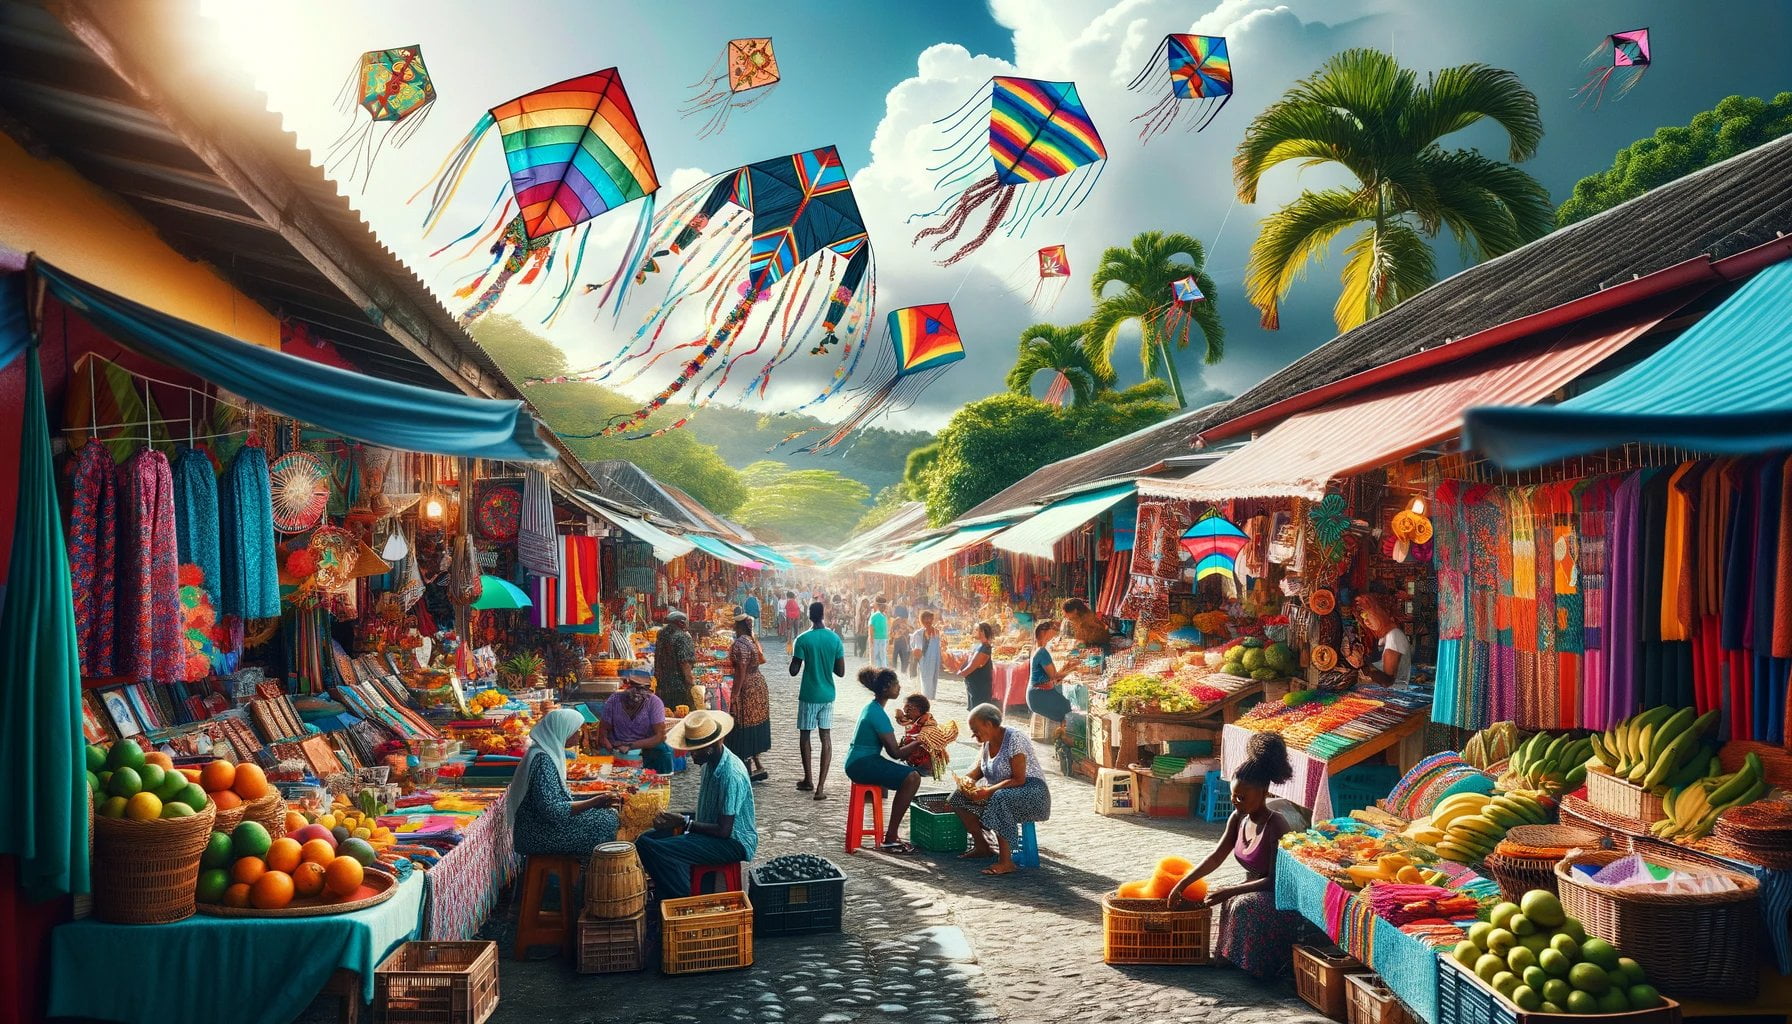 Antigua and Barbuda culture